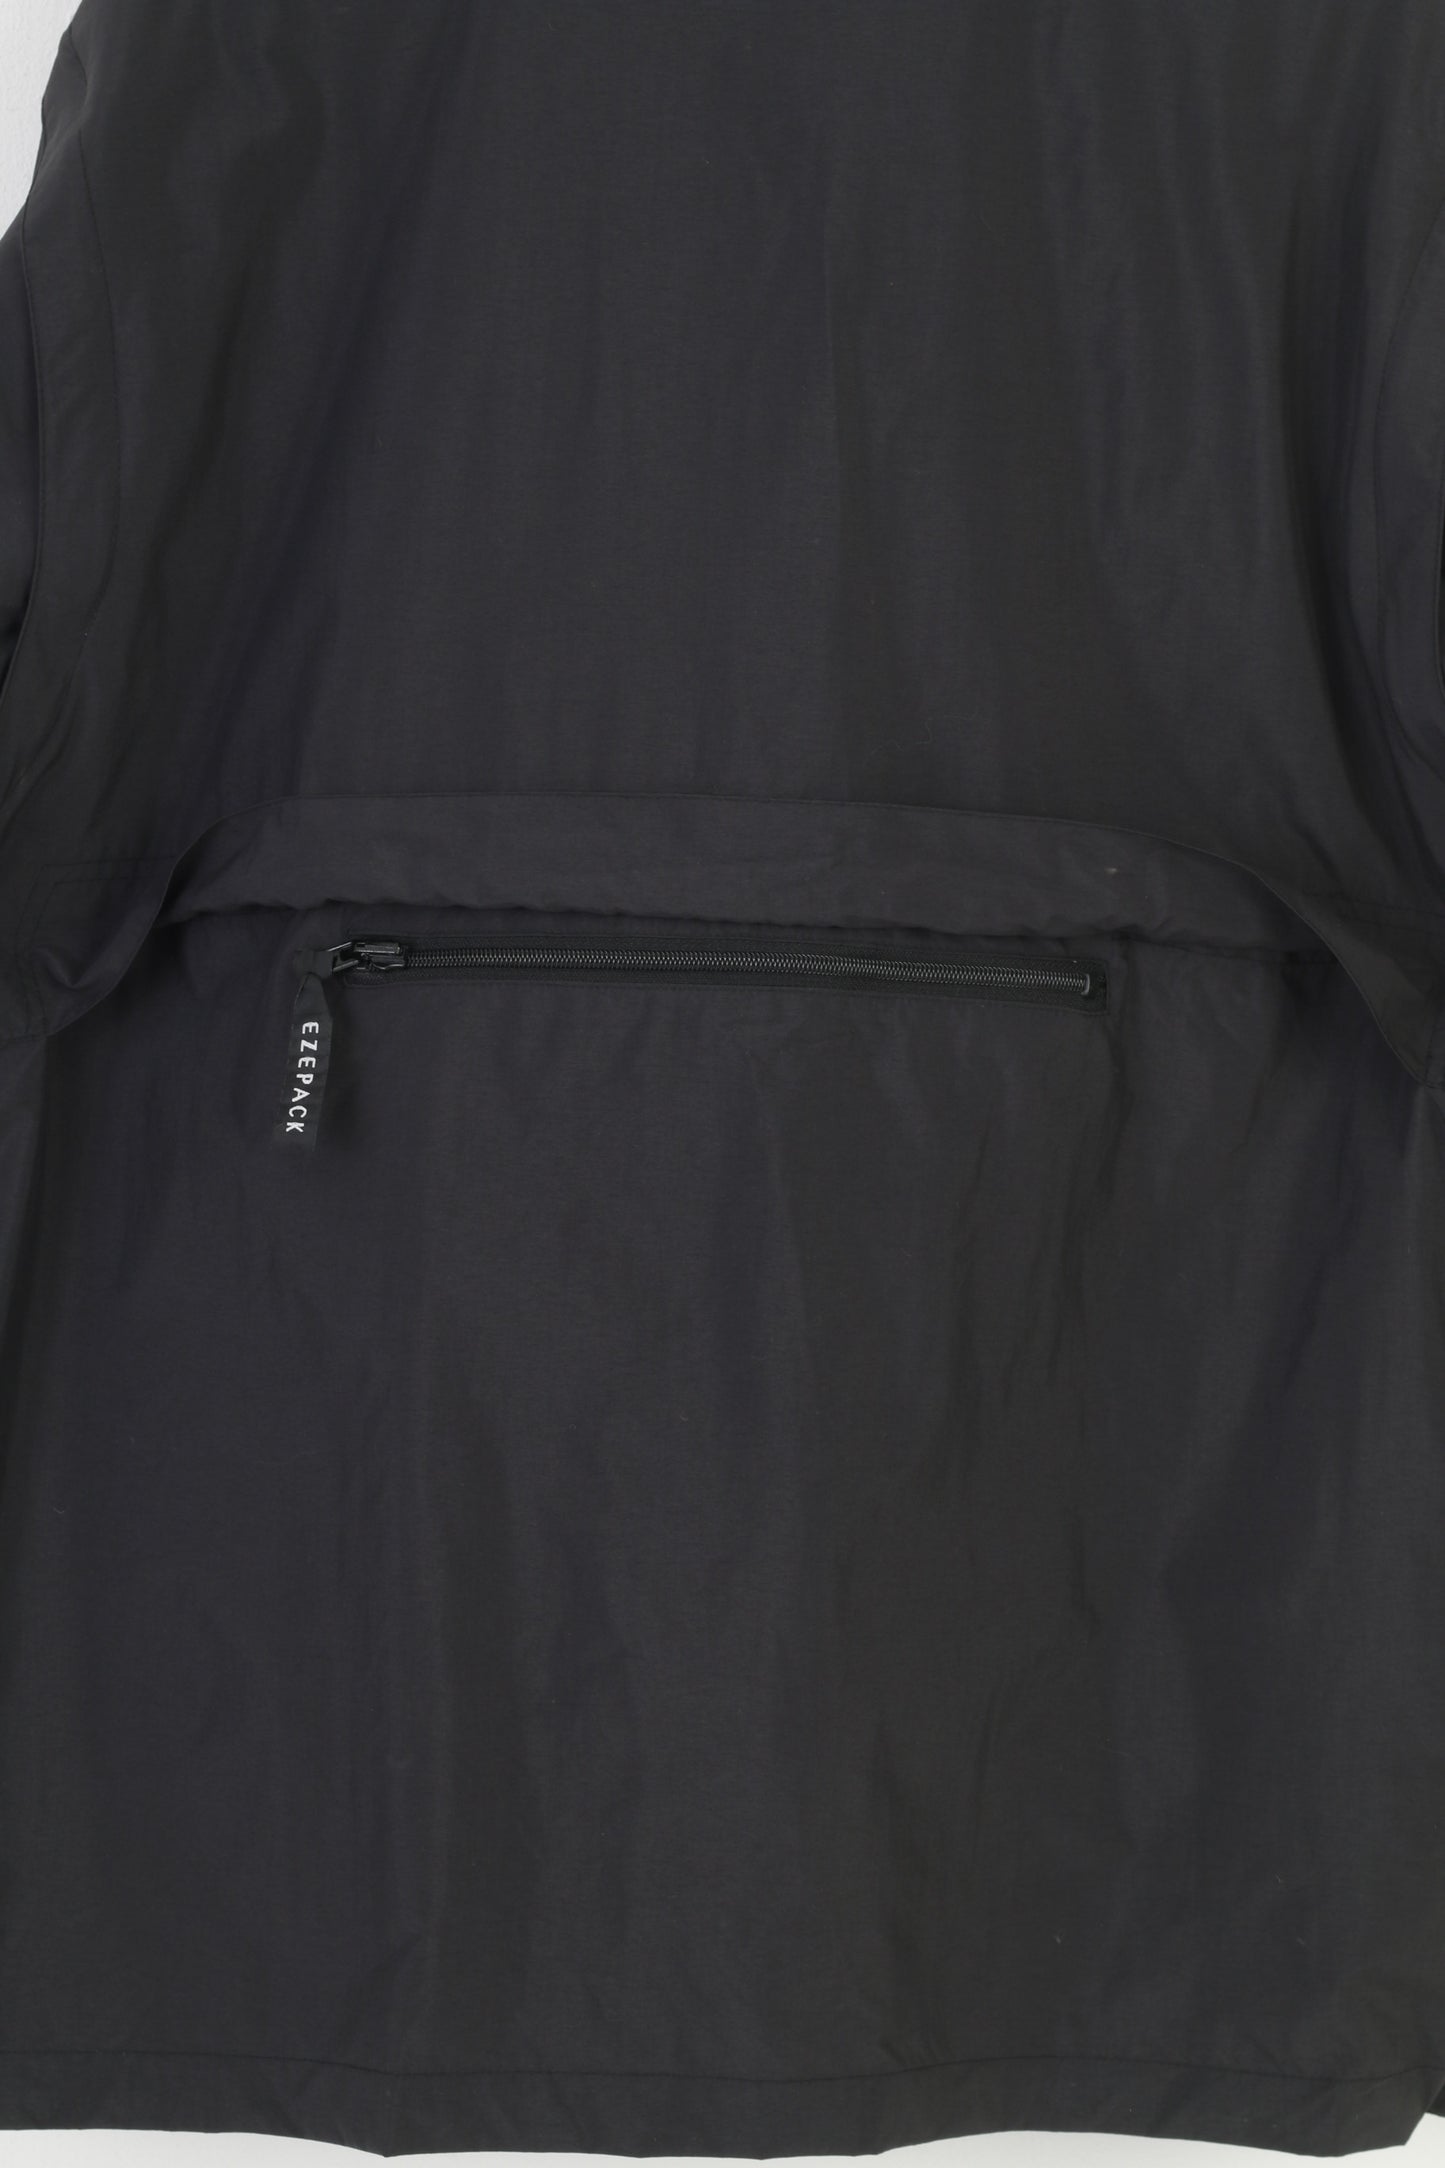 North End Men L Jacket Full Zipper Black Waterproof ConocoPhilips Vintage Detachable Sleeves Top